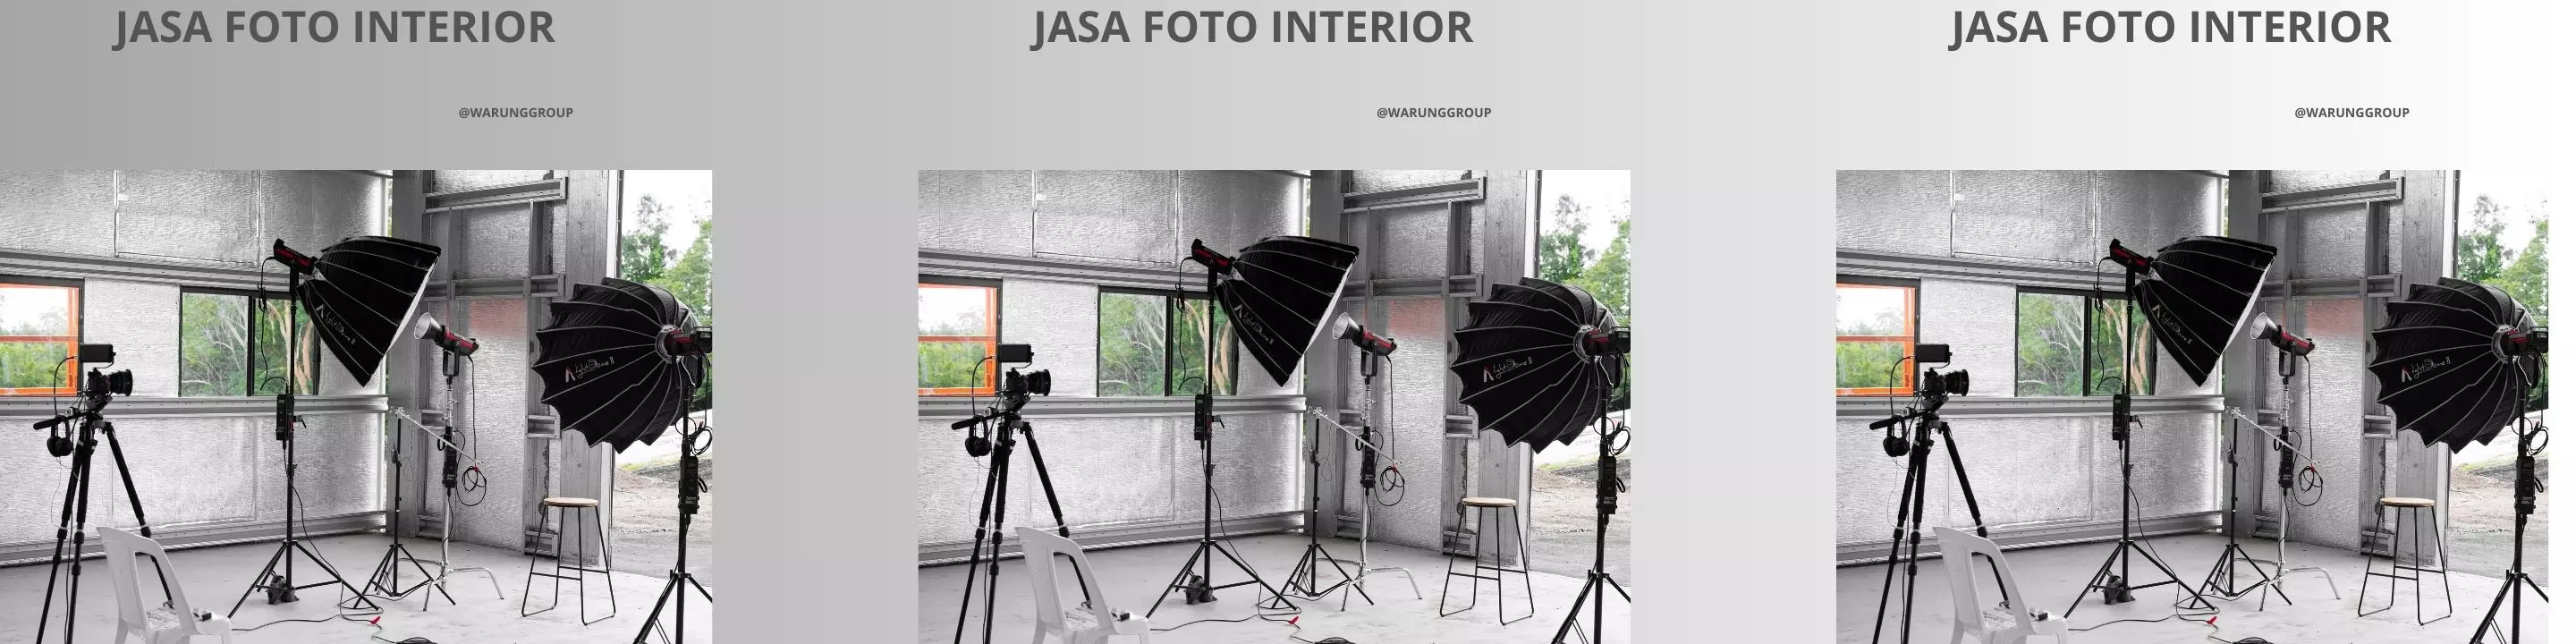 Jasa Foto Interior